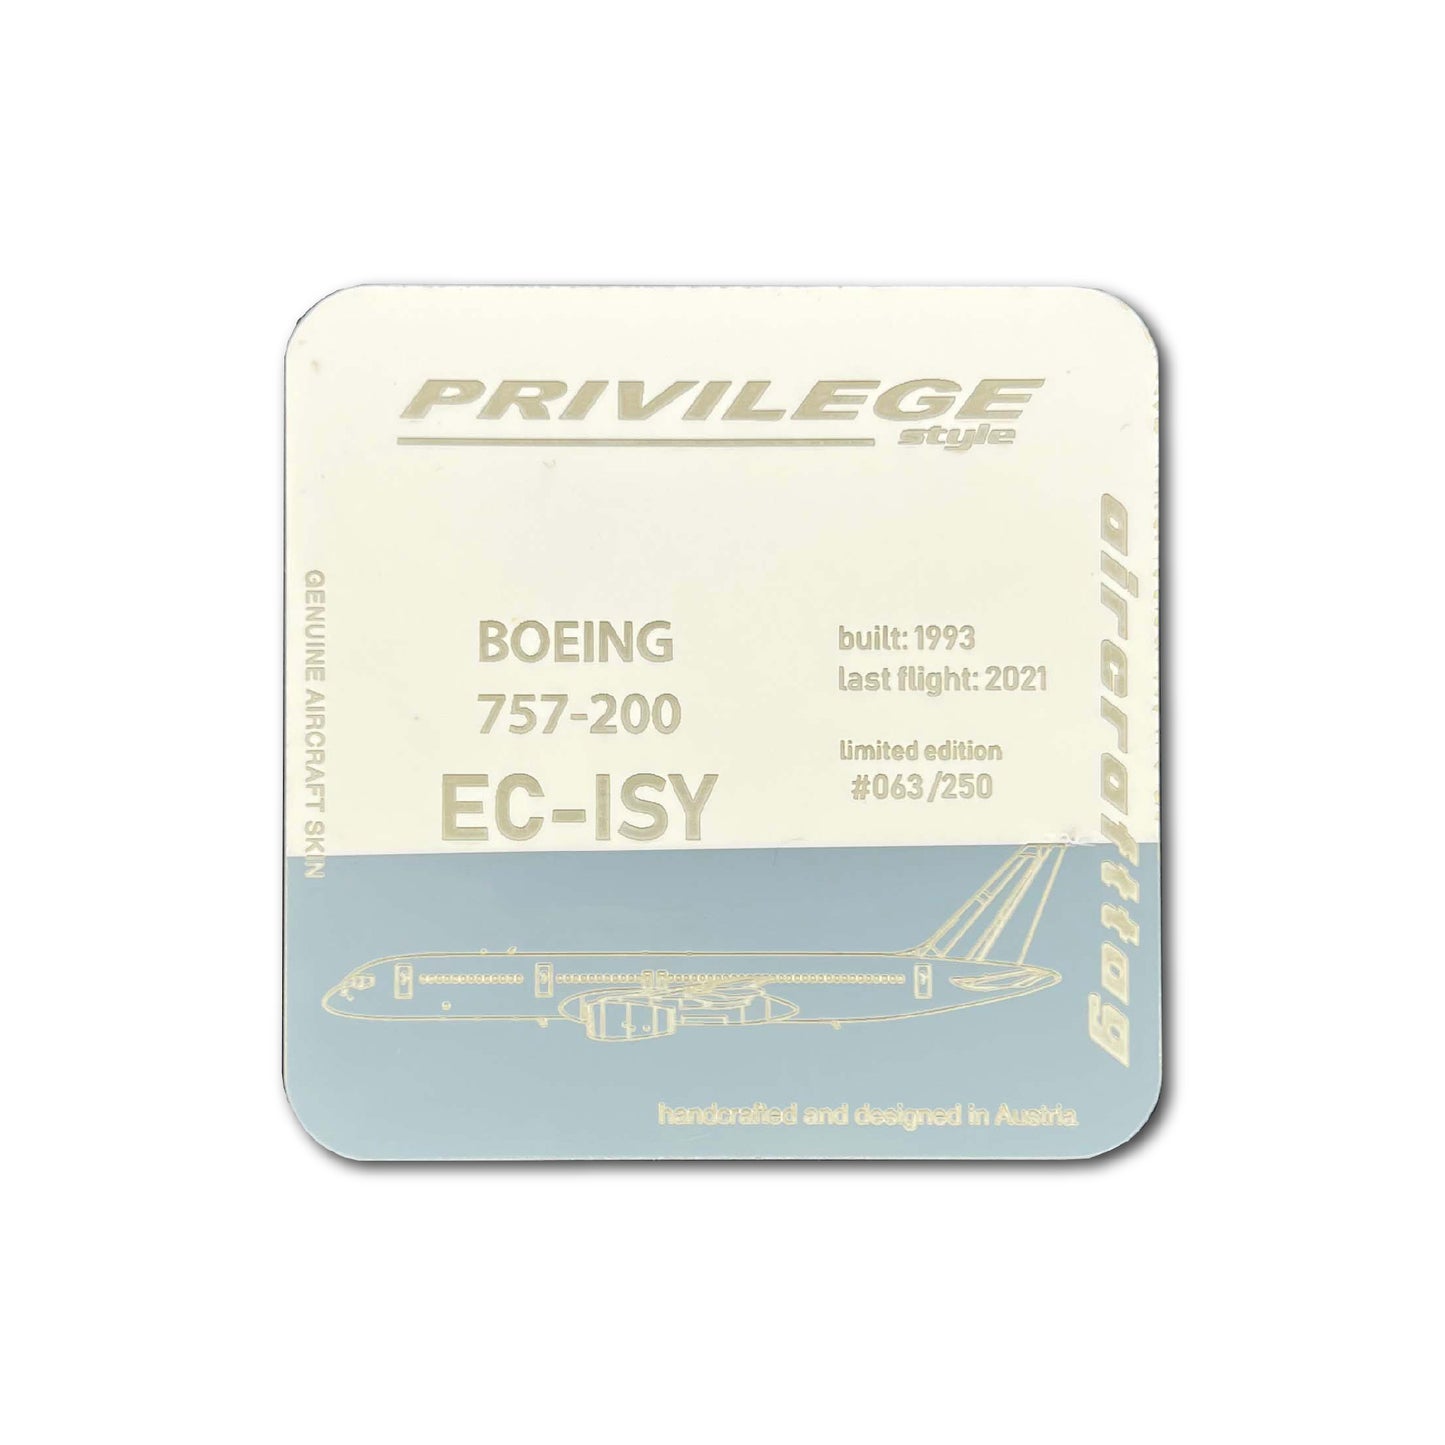 Coaster Boeing 757 - Privilege style - EC-ISY